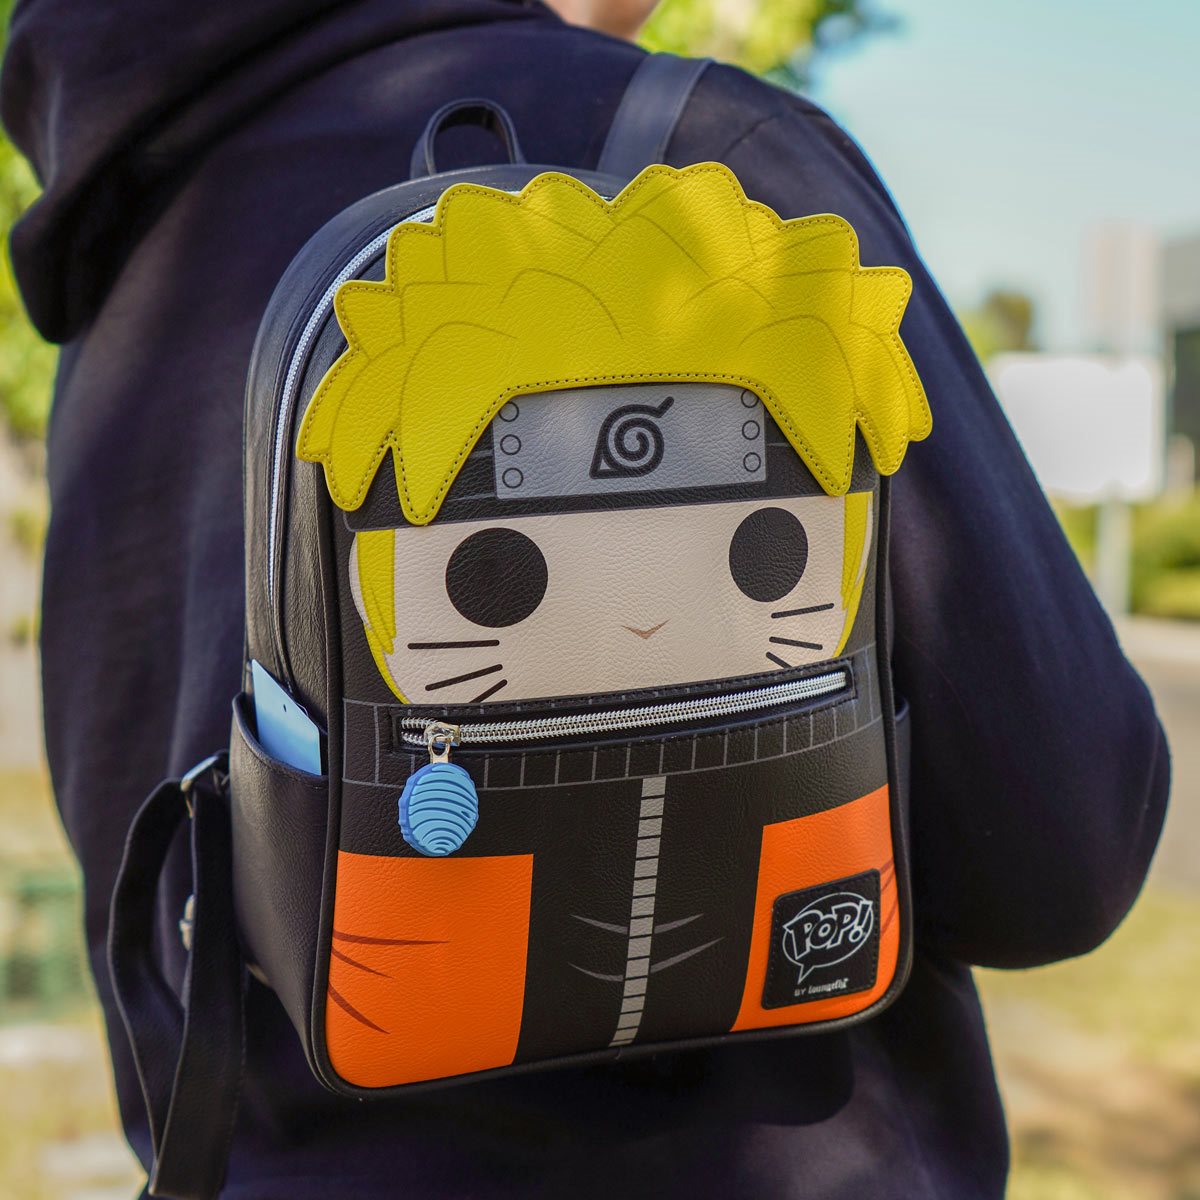 Naruto Uzumaki 16 Inch Kids Backpack